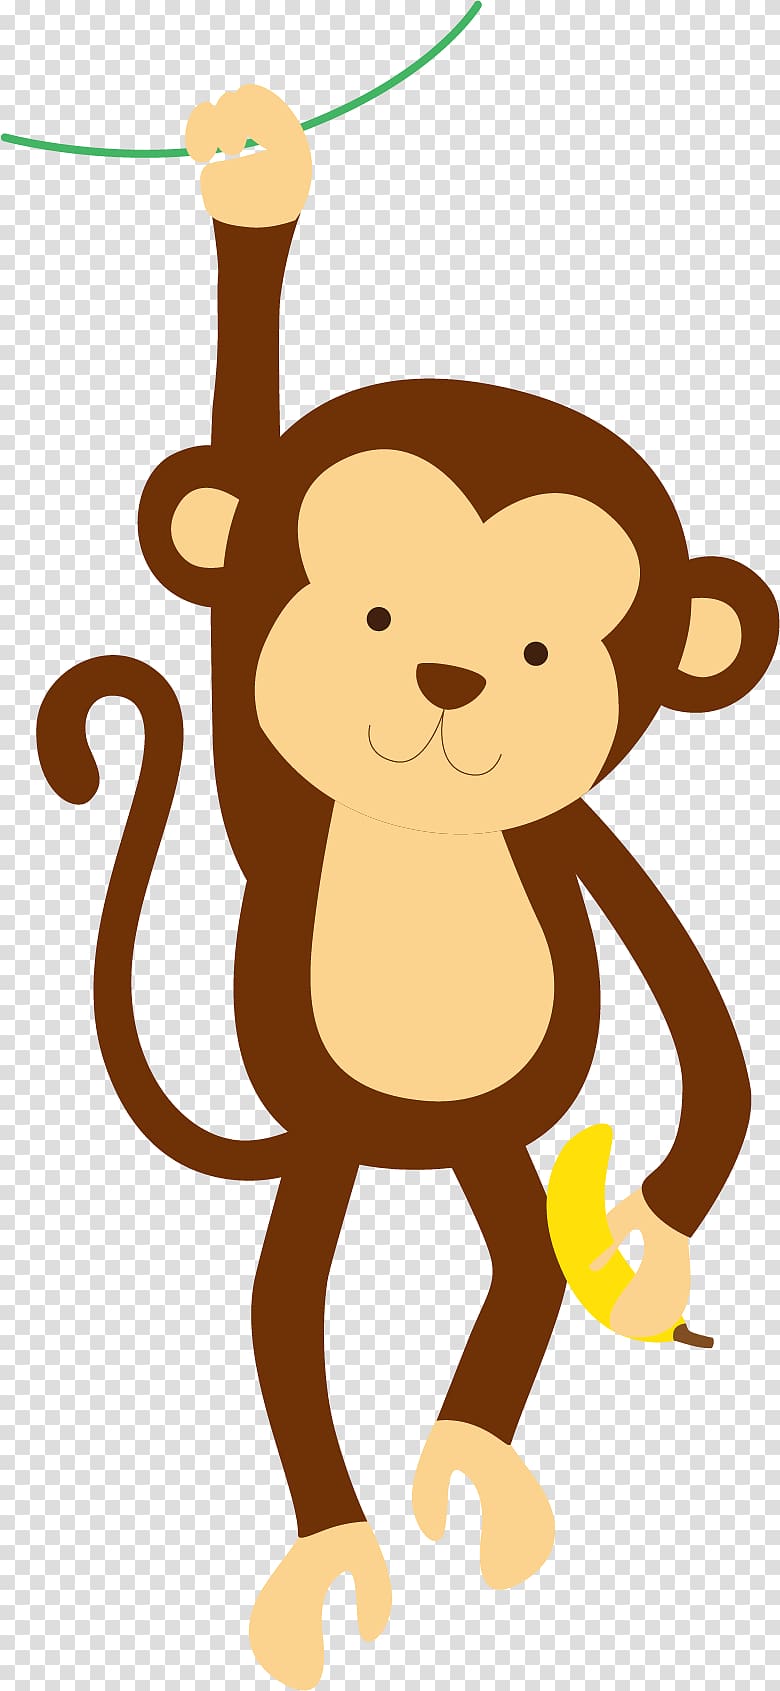 brown monkey illustration, Giraffe Pony Monkey Cuteness, Take the monkey of banana transparent background PNG clipart